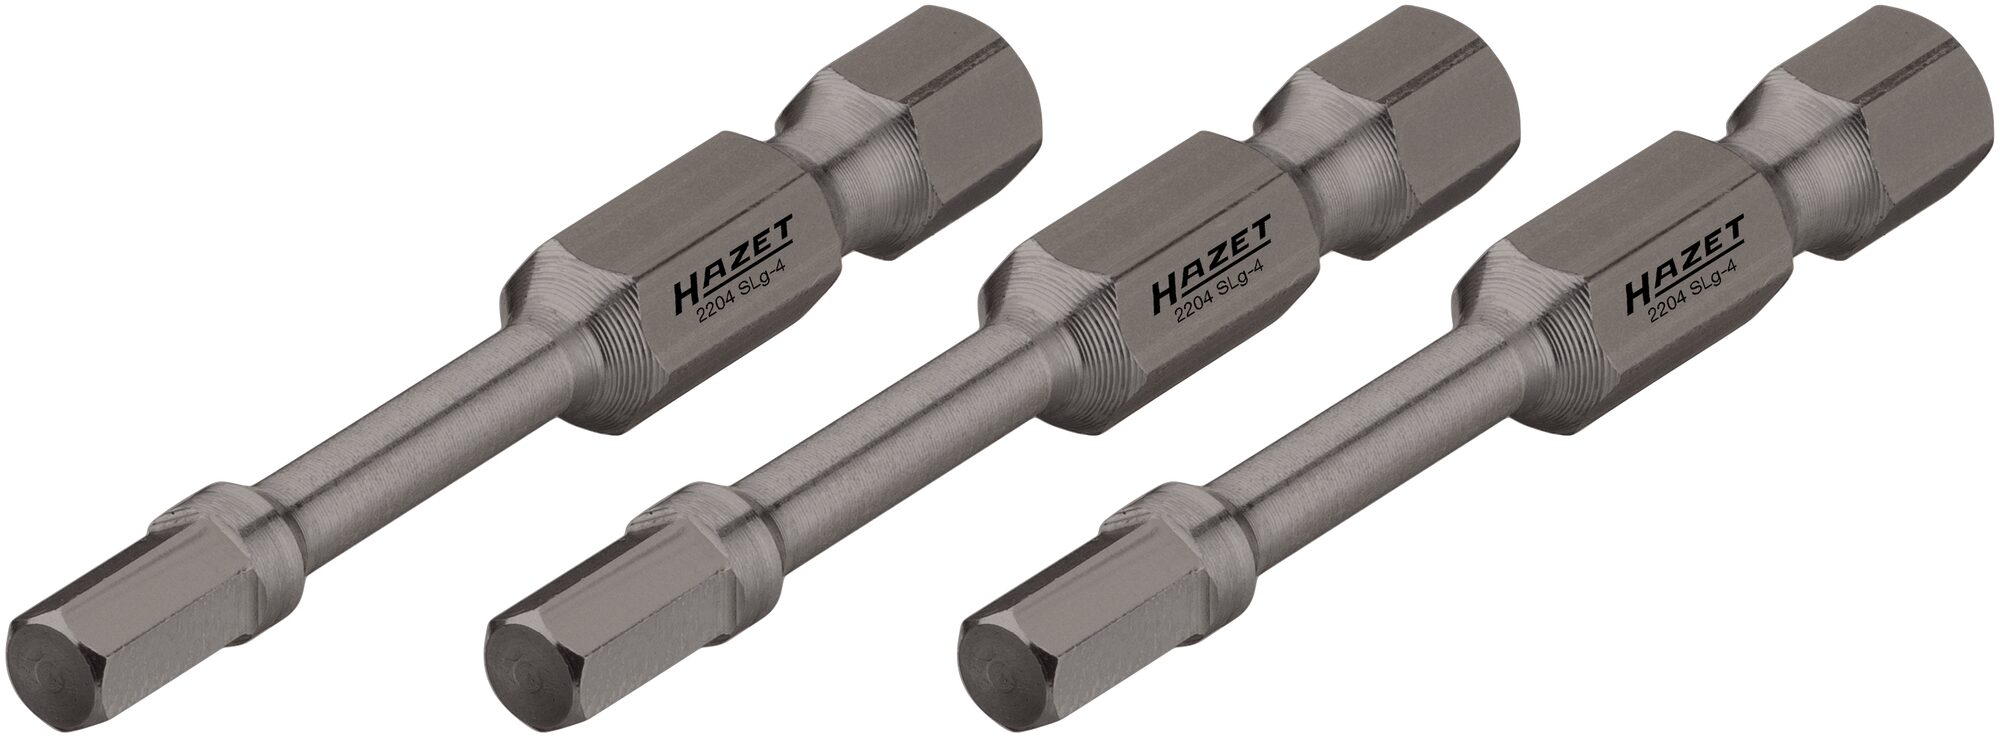 HAZET Schlag-, Maschinenschrauber Torsions-Bits 2204SLG-5/3 · Sechskant massiv 6,3 (1/4 Zoll) · Innen Sechskant Profil · 5 mm · Anzahl Werkzeuge: 3